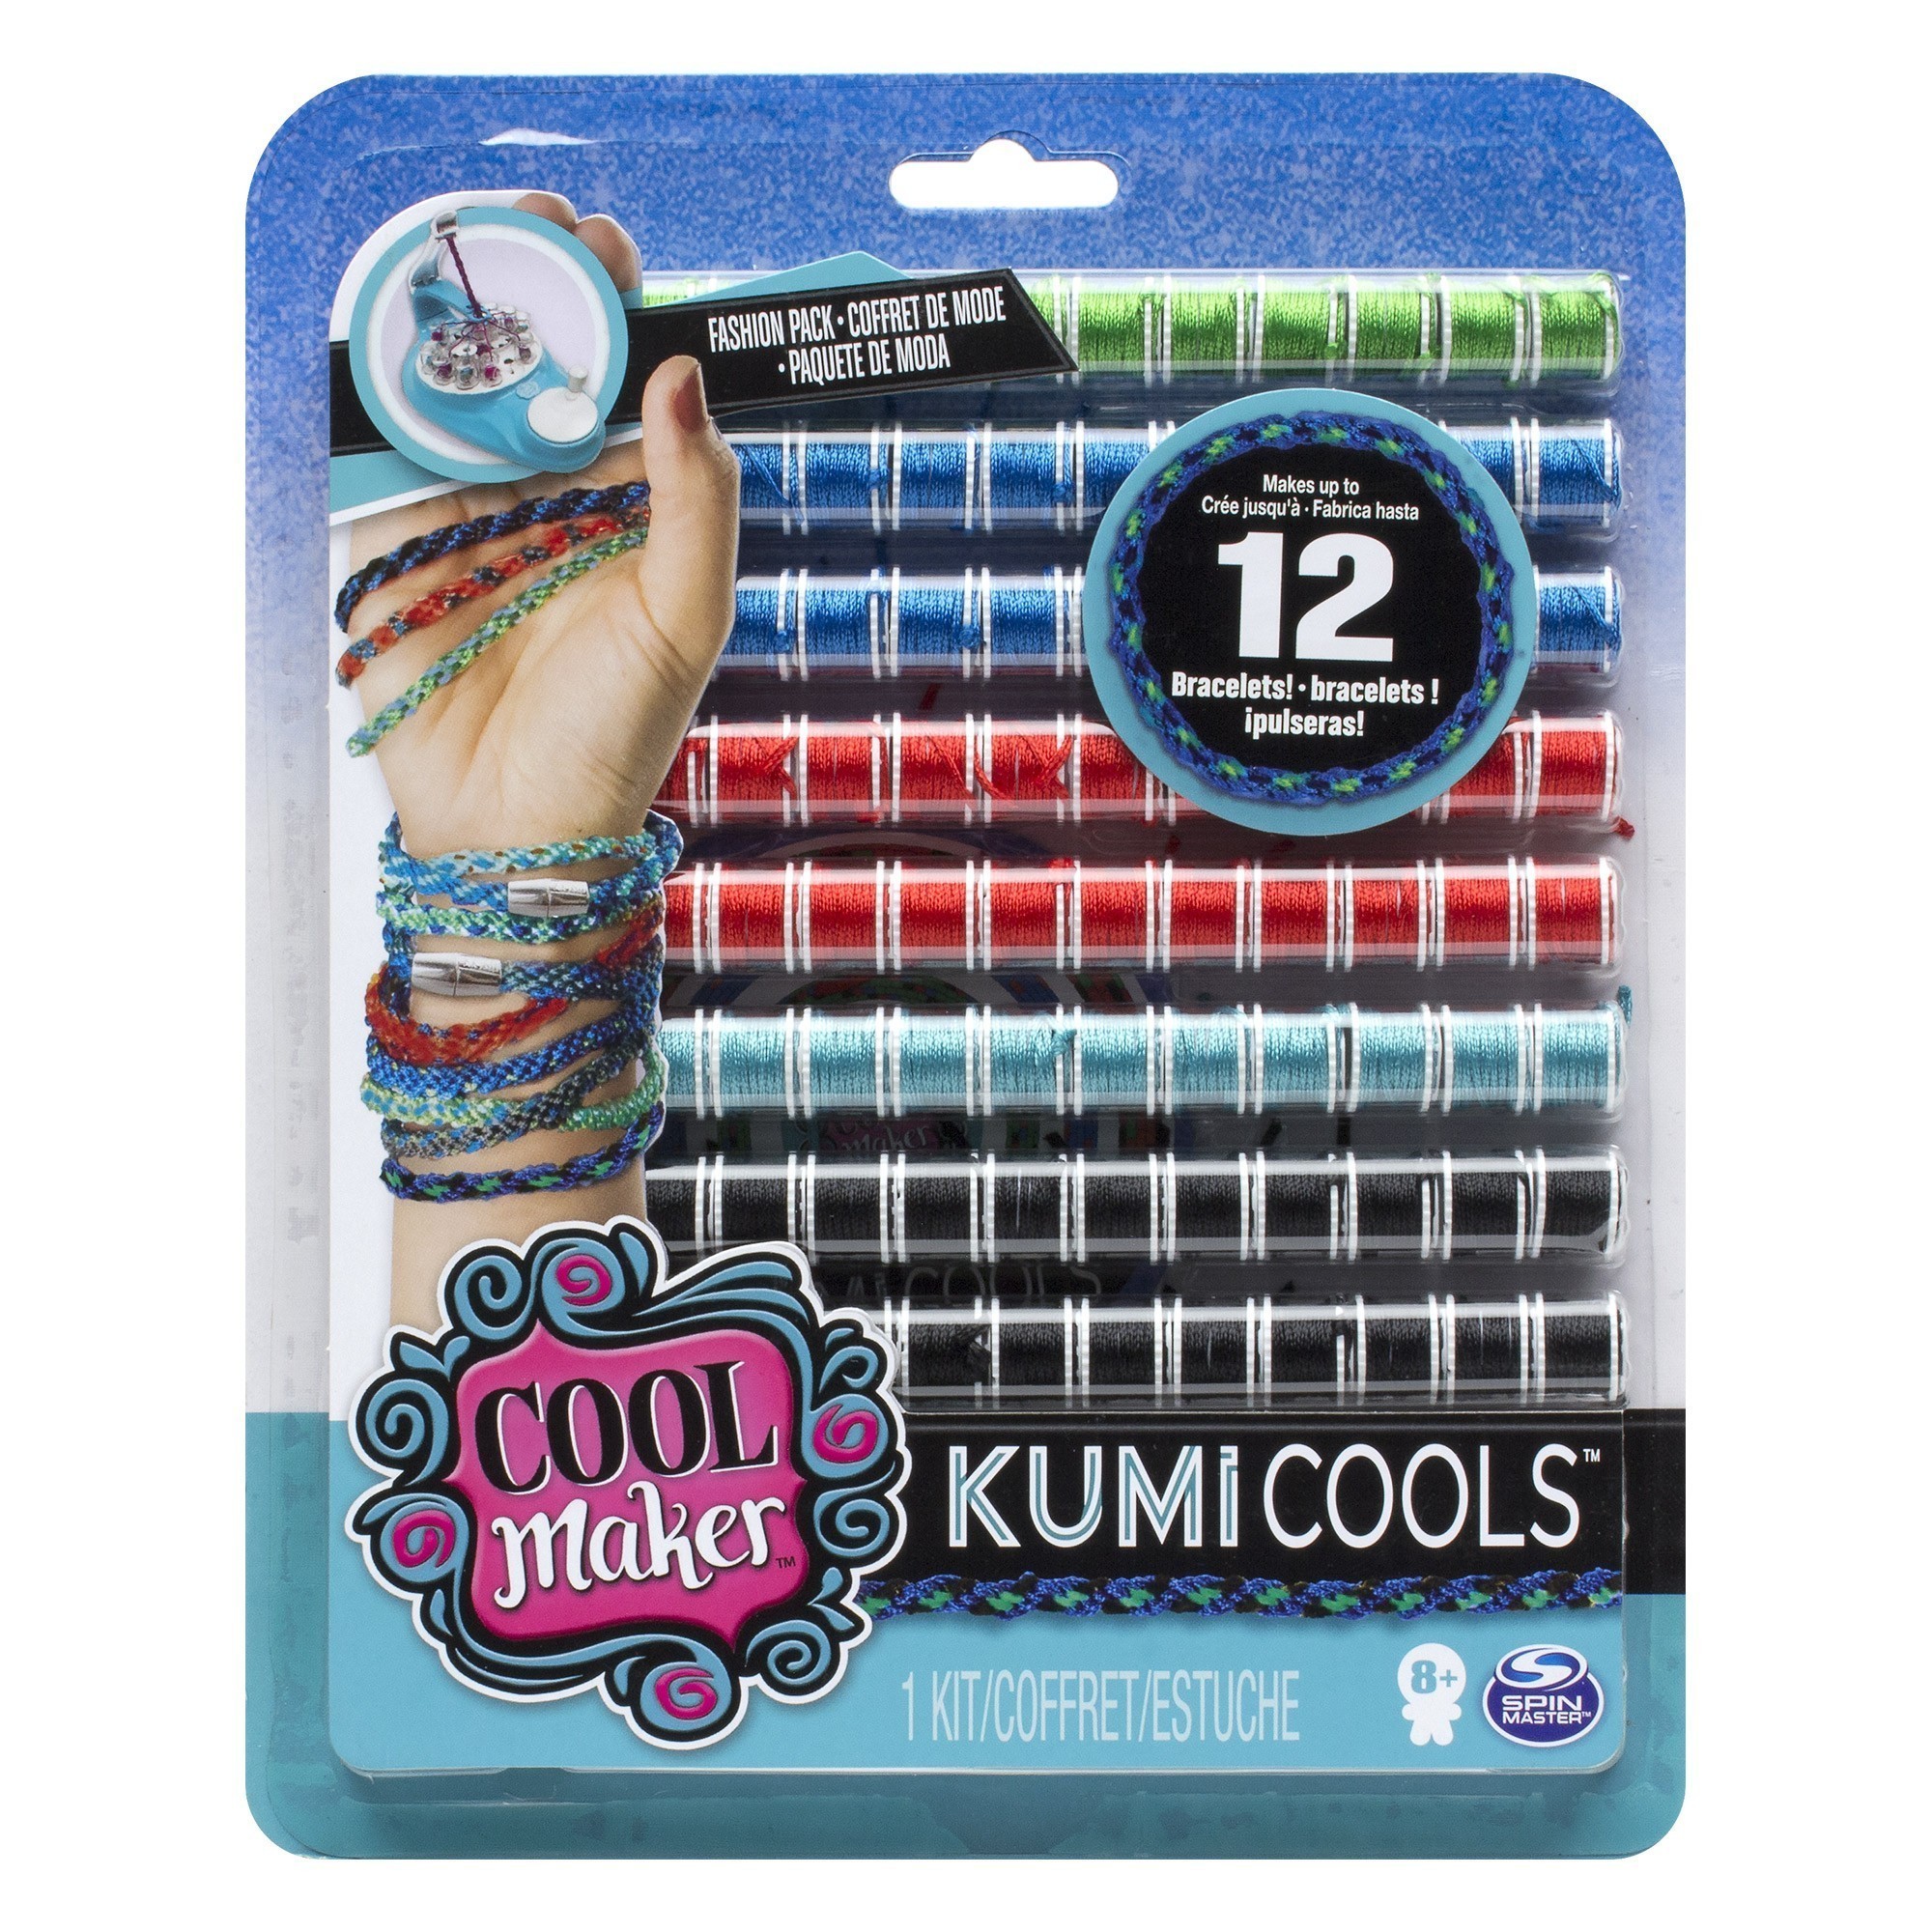 Cool Maker - Kumi Cools Fashion Pack